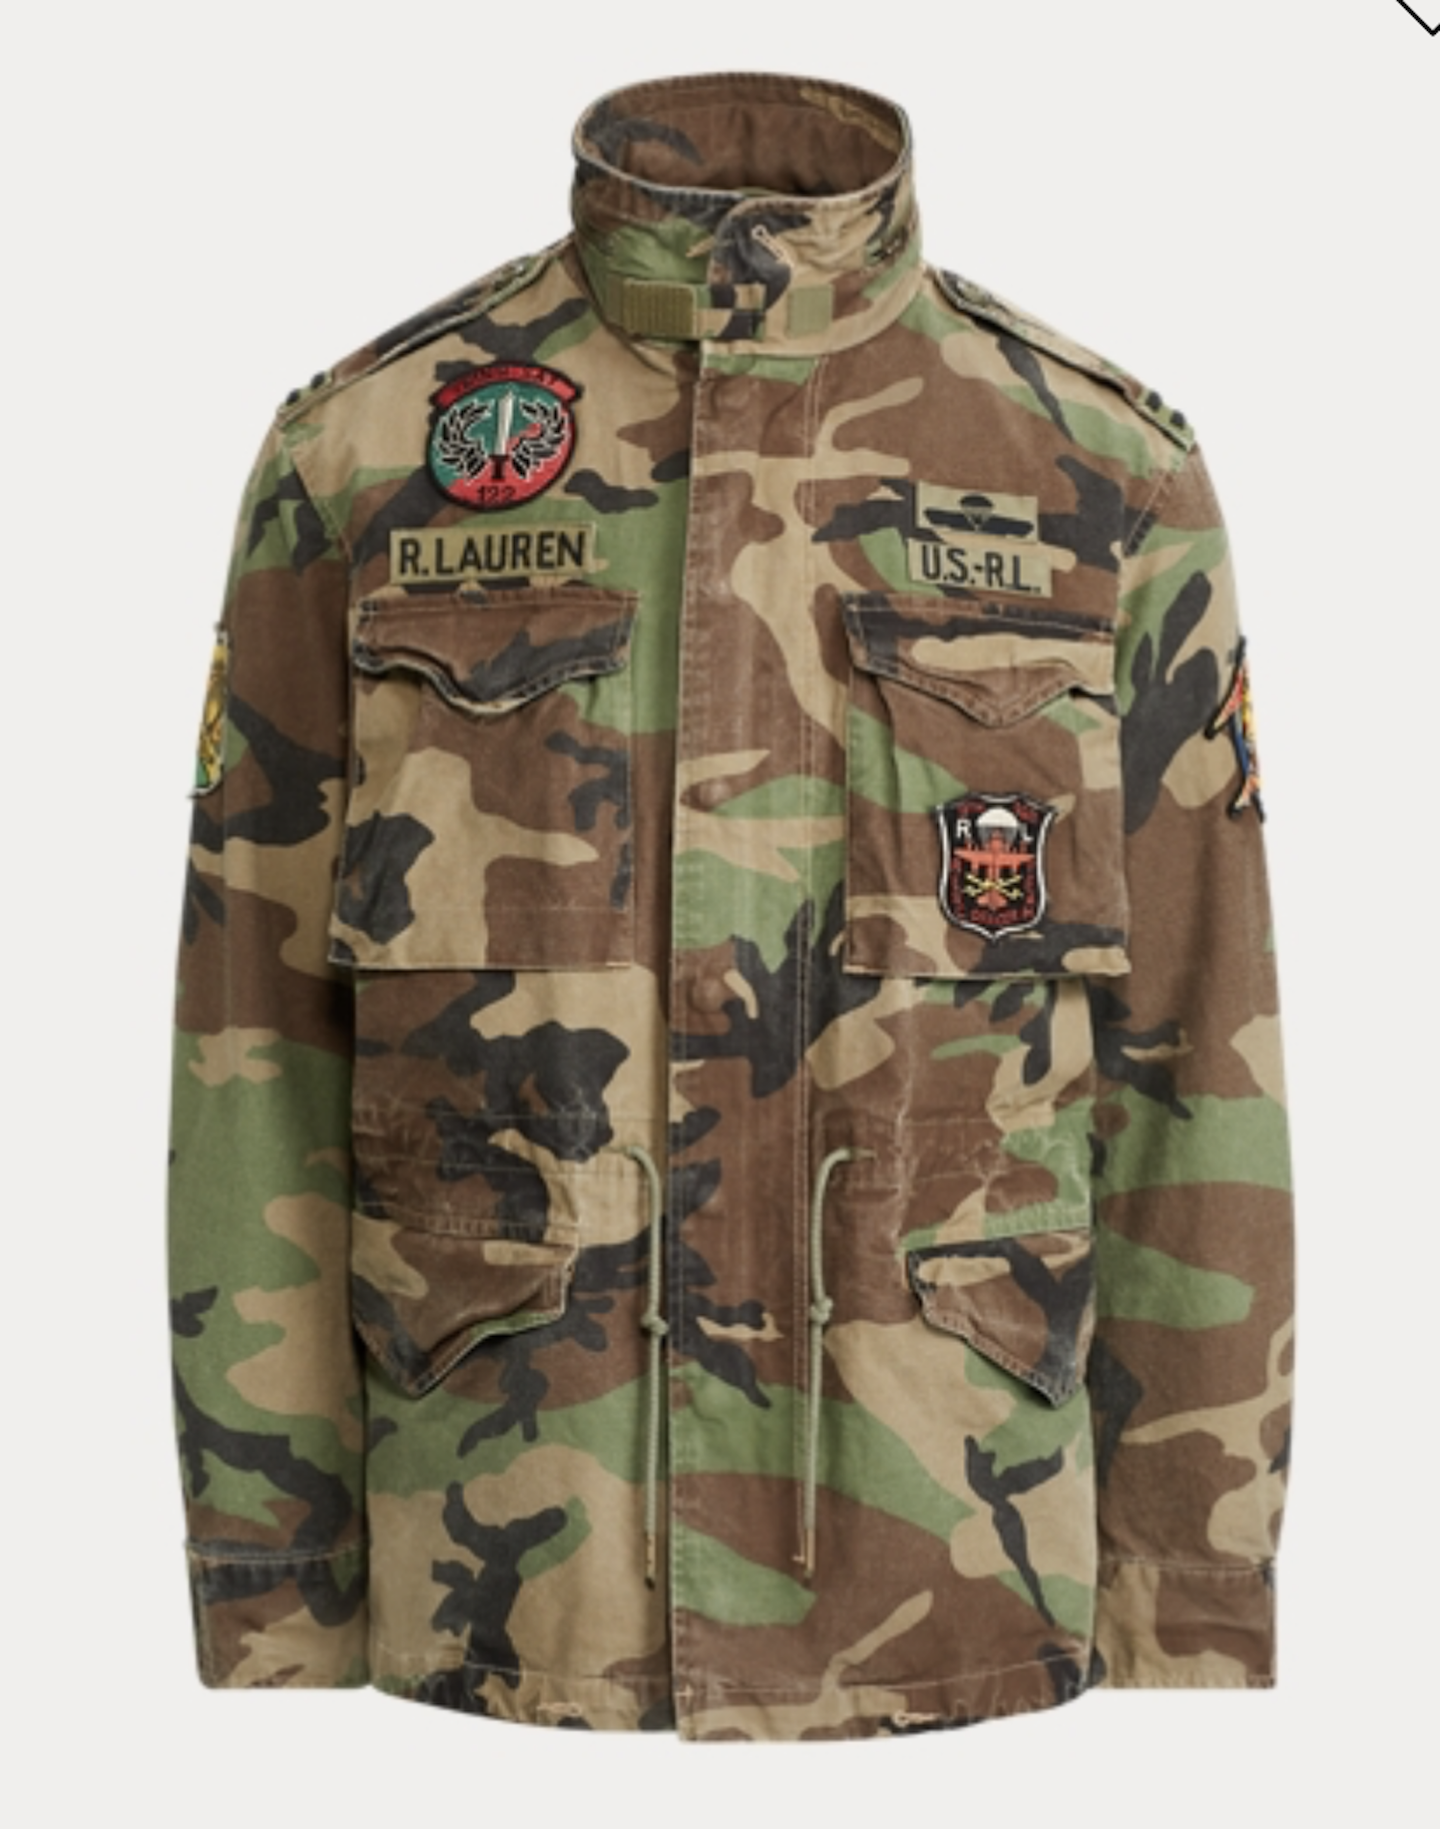 polo ralph lauren m65 military jacket